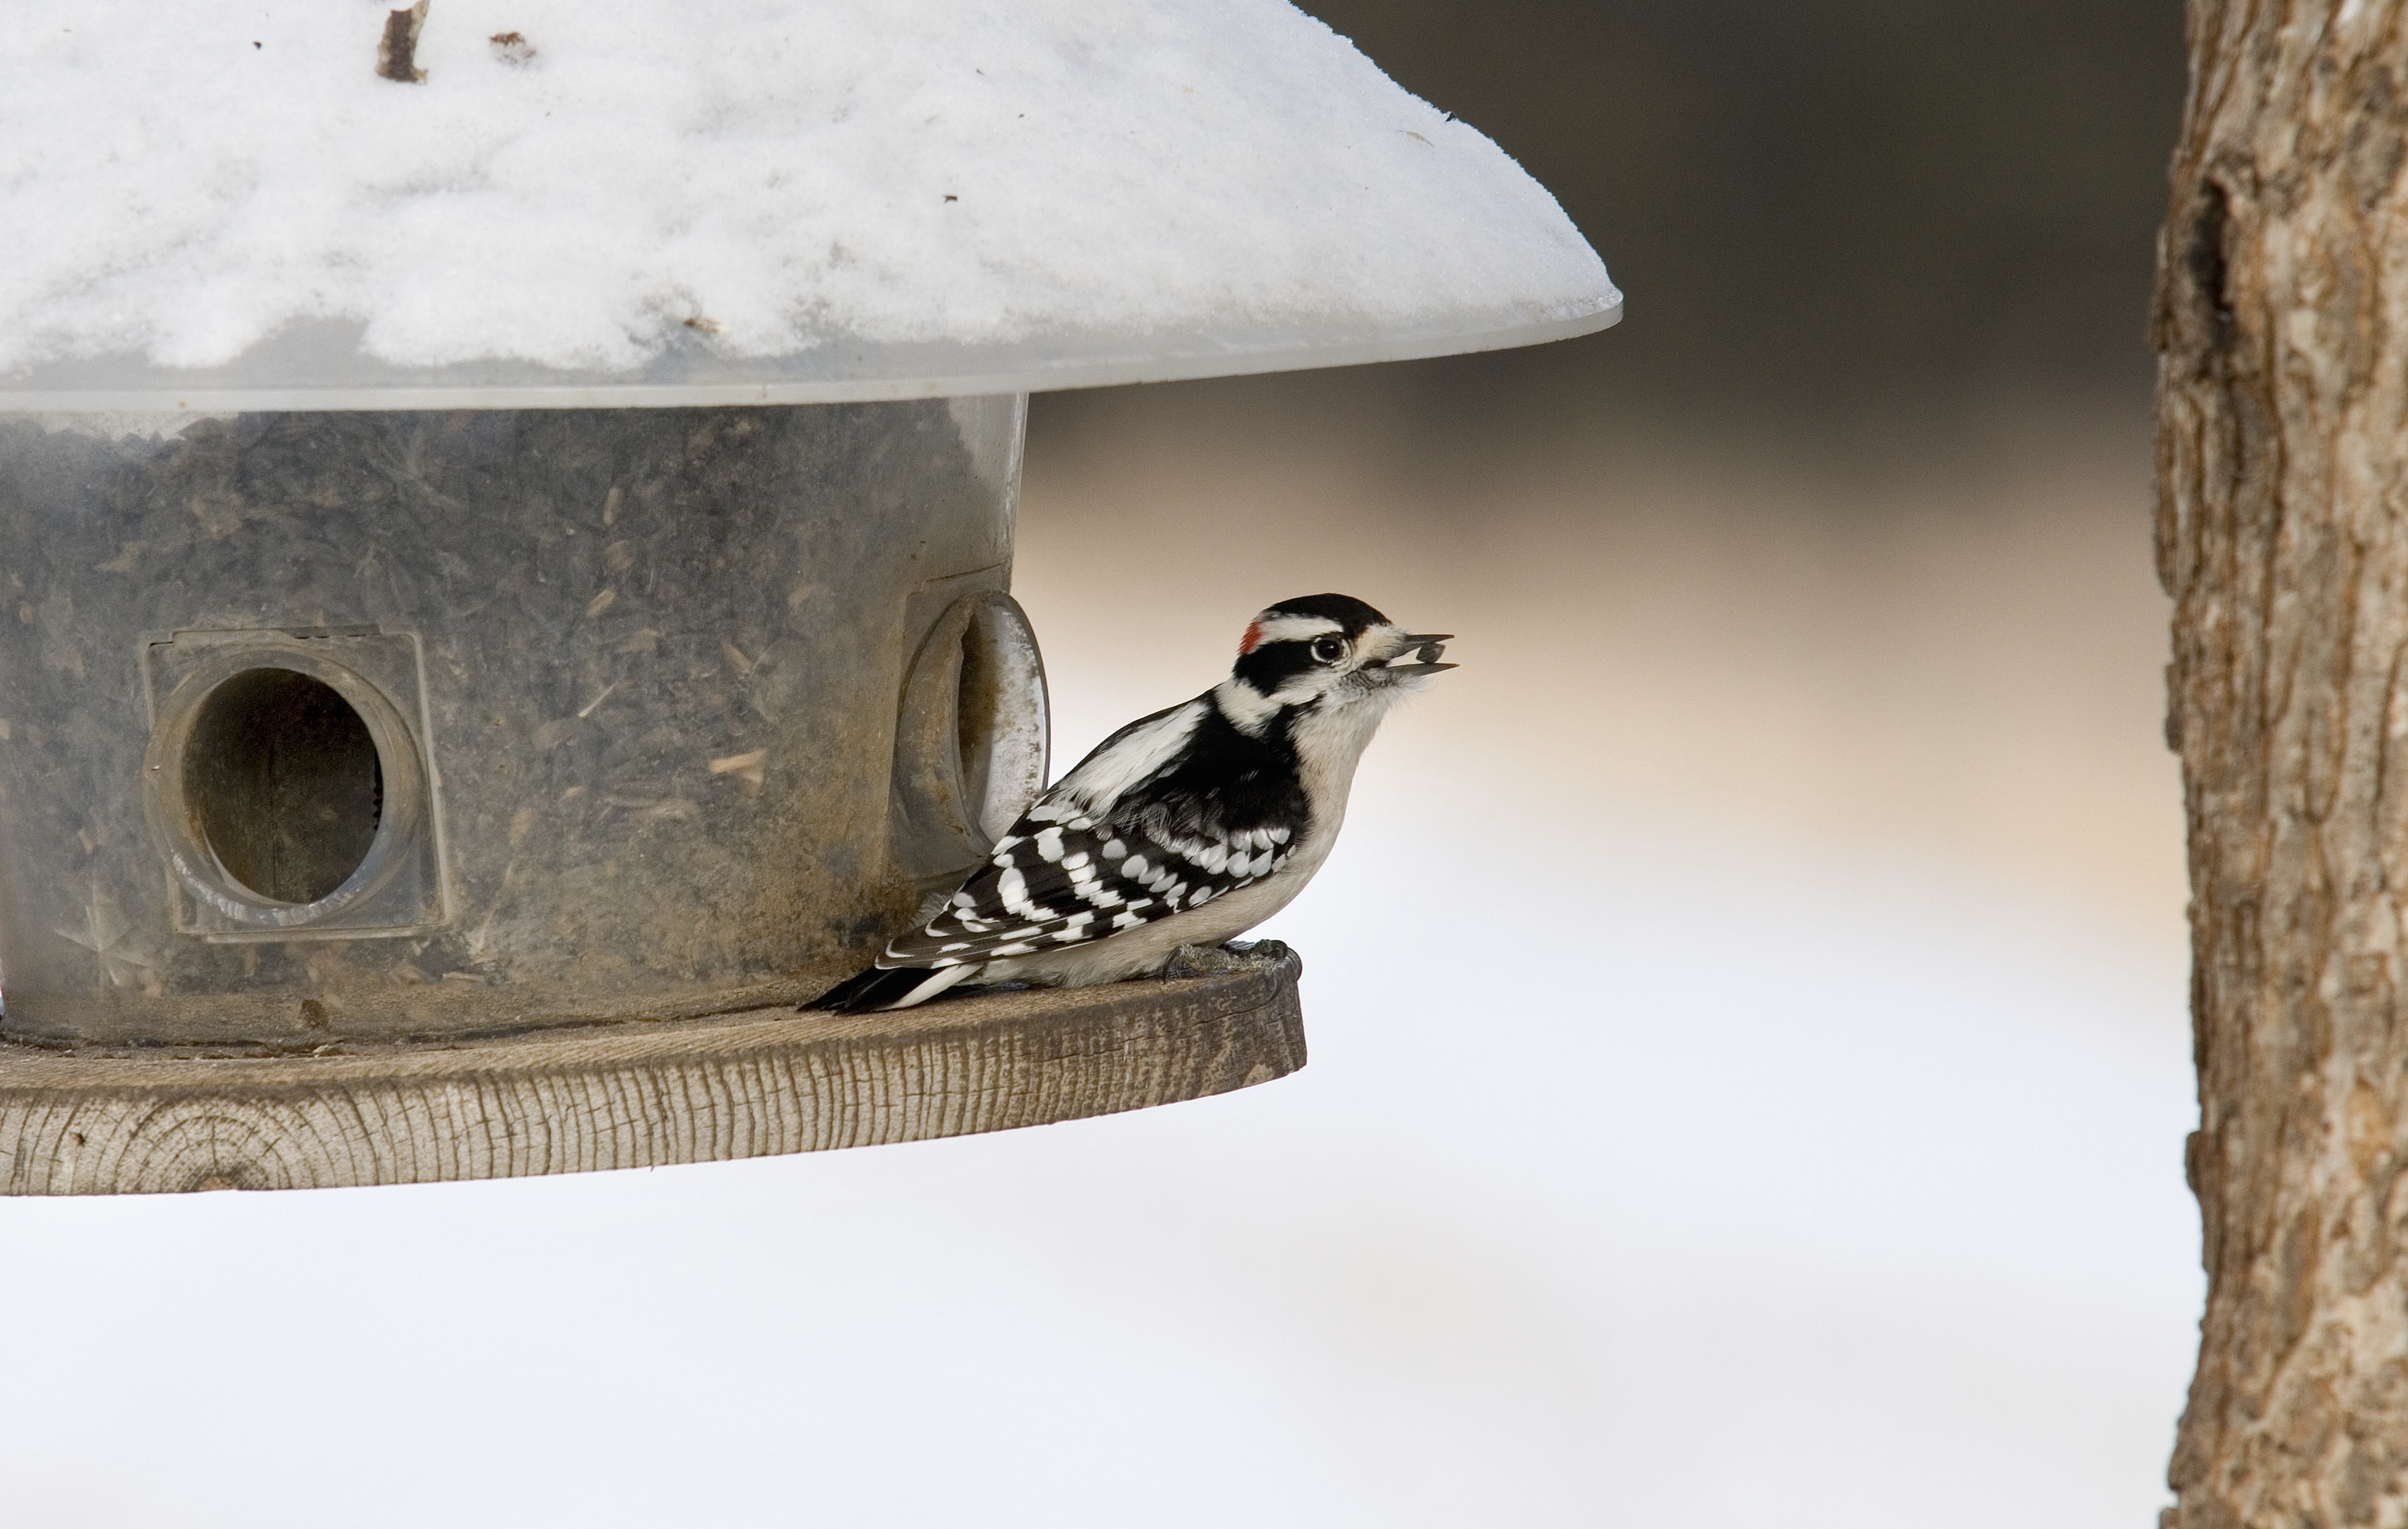 birds on bird feeder in snow